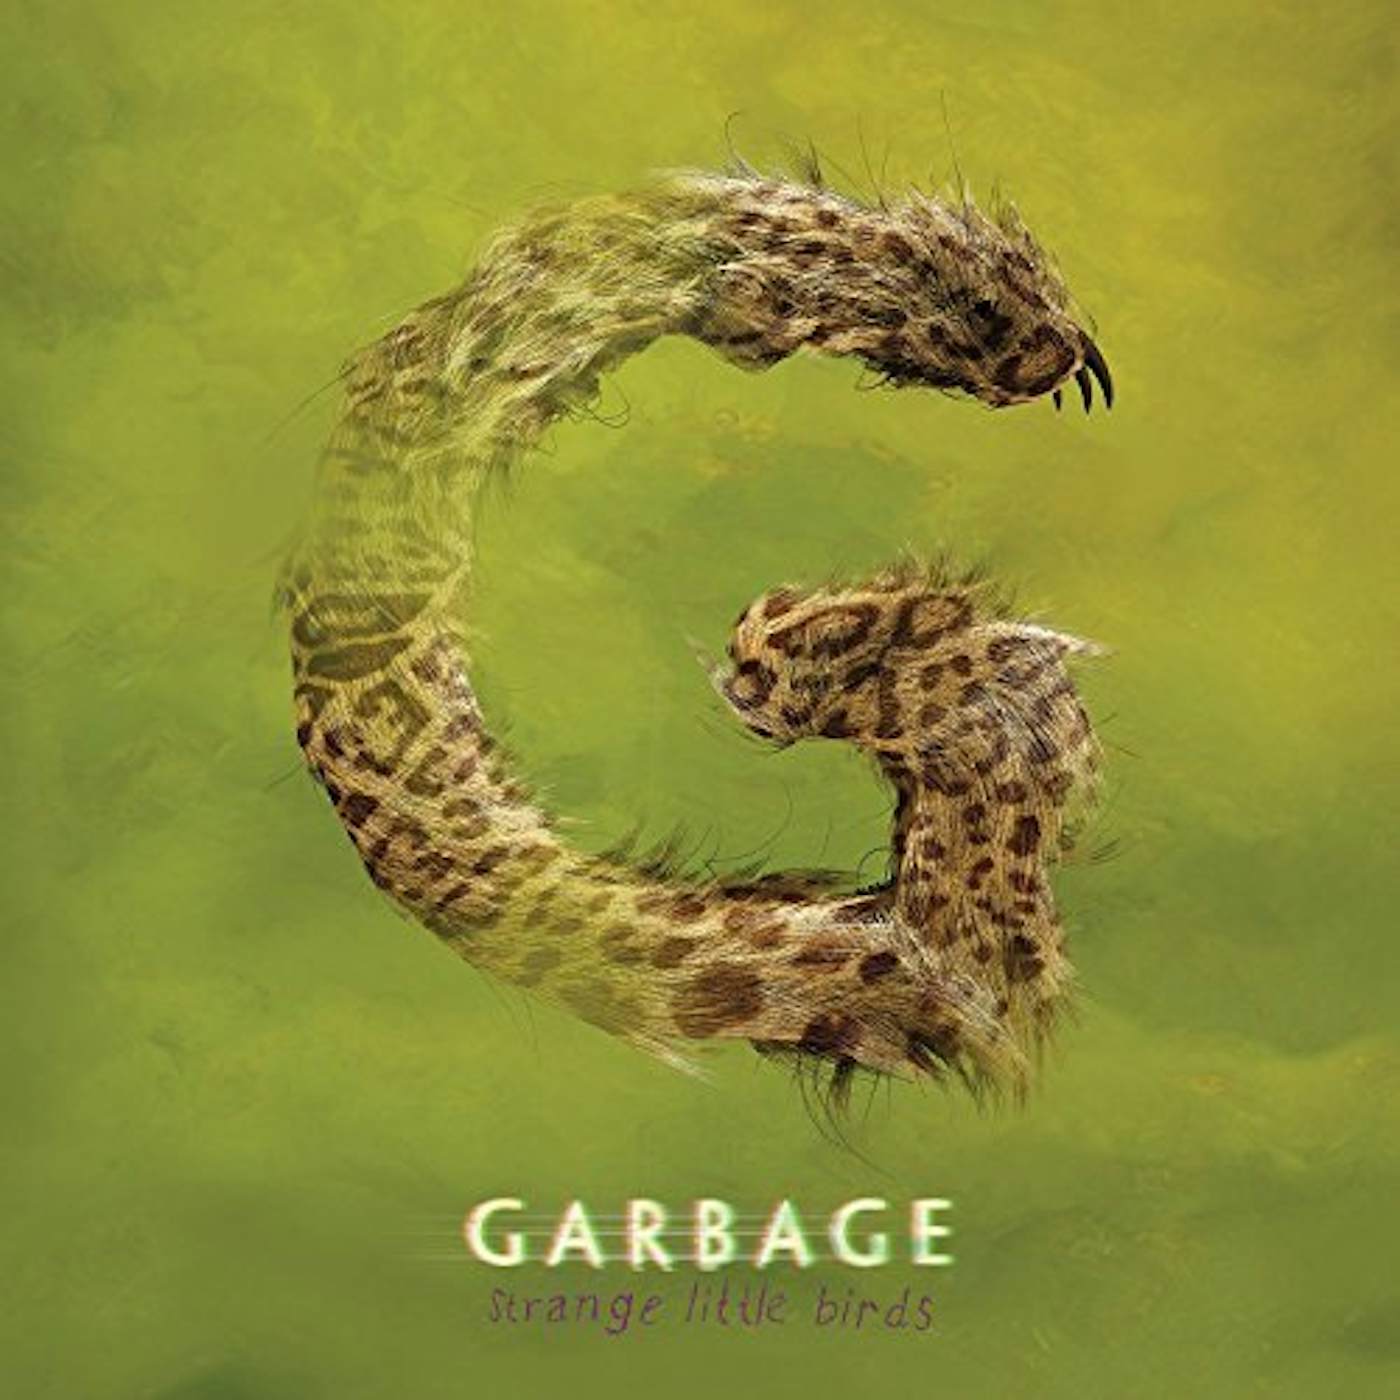 Garbage STRANGE LITTLE BIRDS CD